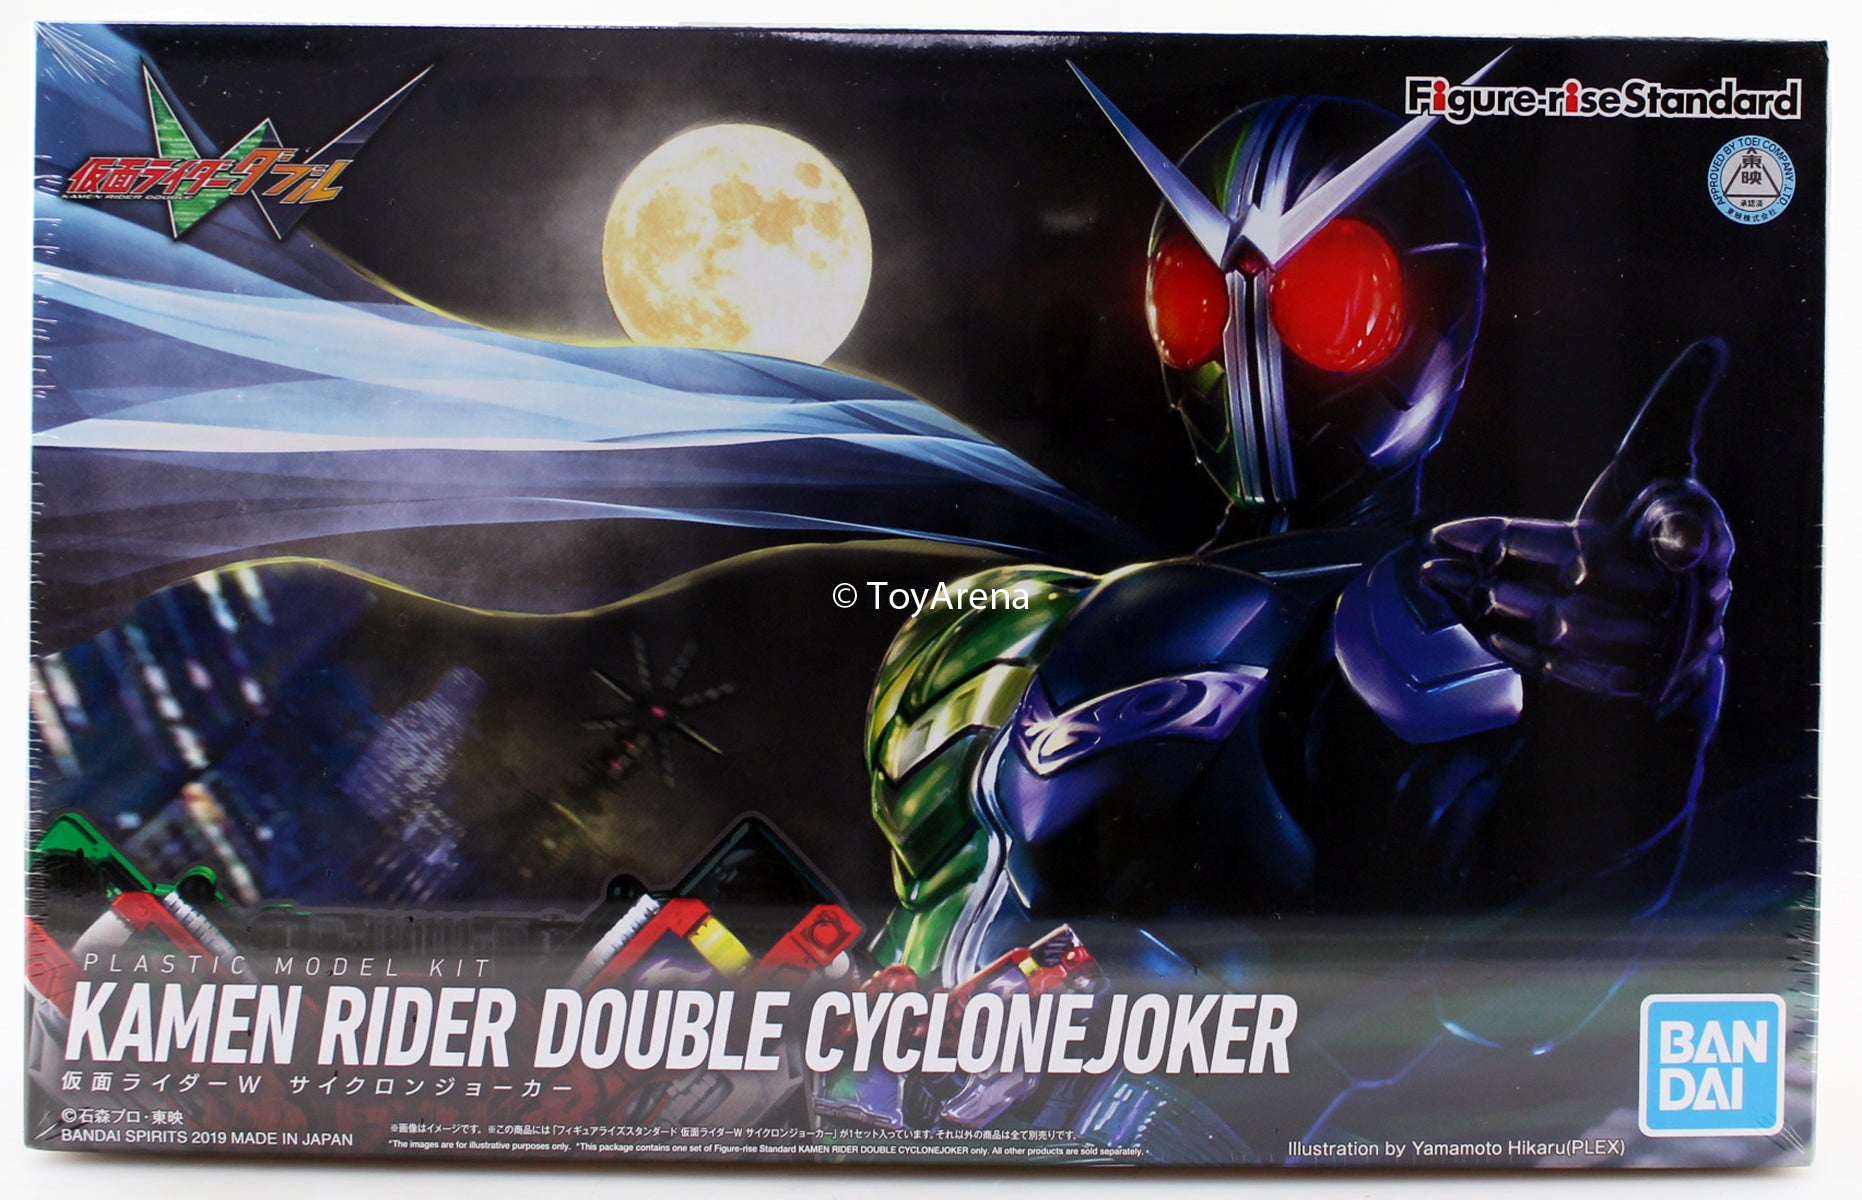 Figure-rise Standard Kamen Masked Rider Double Cyclone Joker Plastic Model Kit